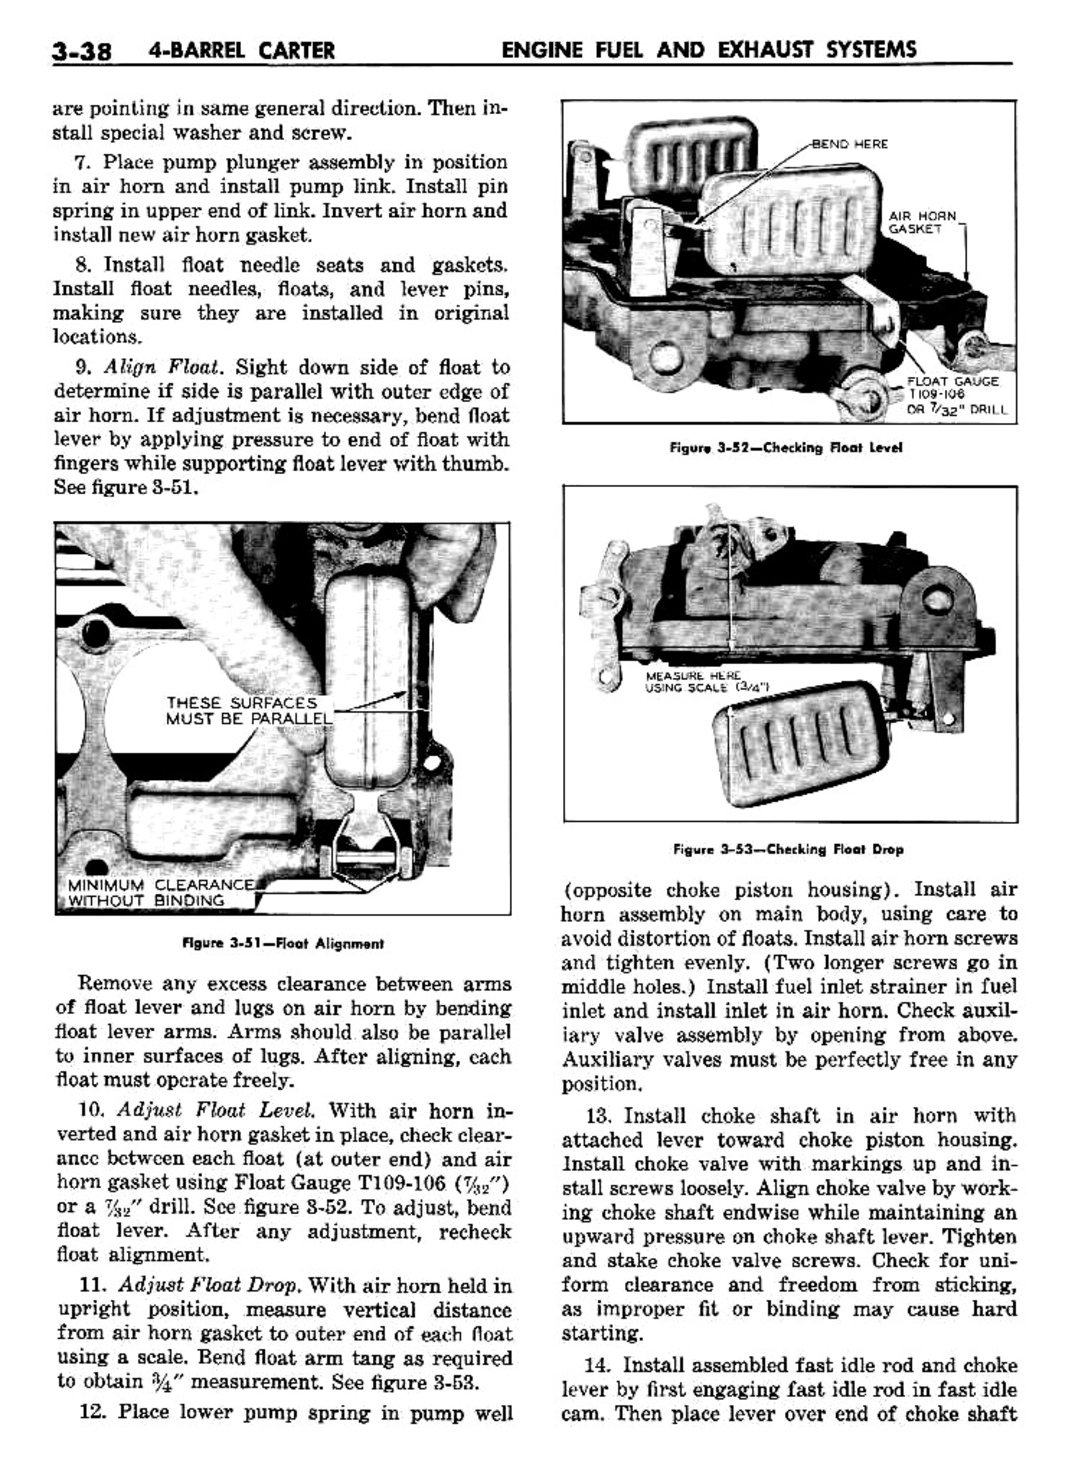 n_04 1957 Buick Shop Manual - Engine Fuel & Exhaust-038-038.jpg